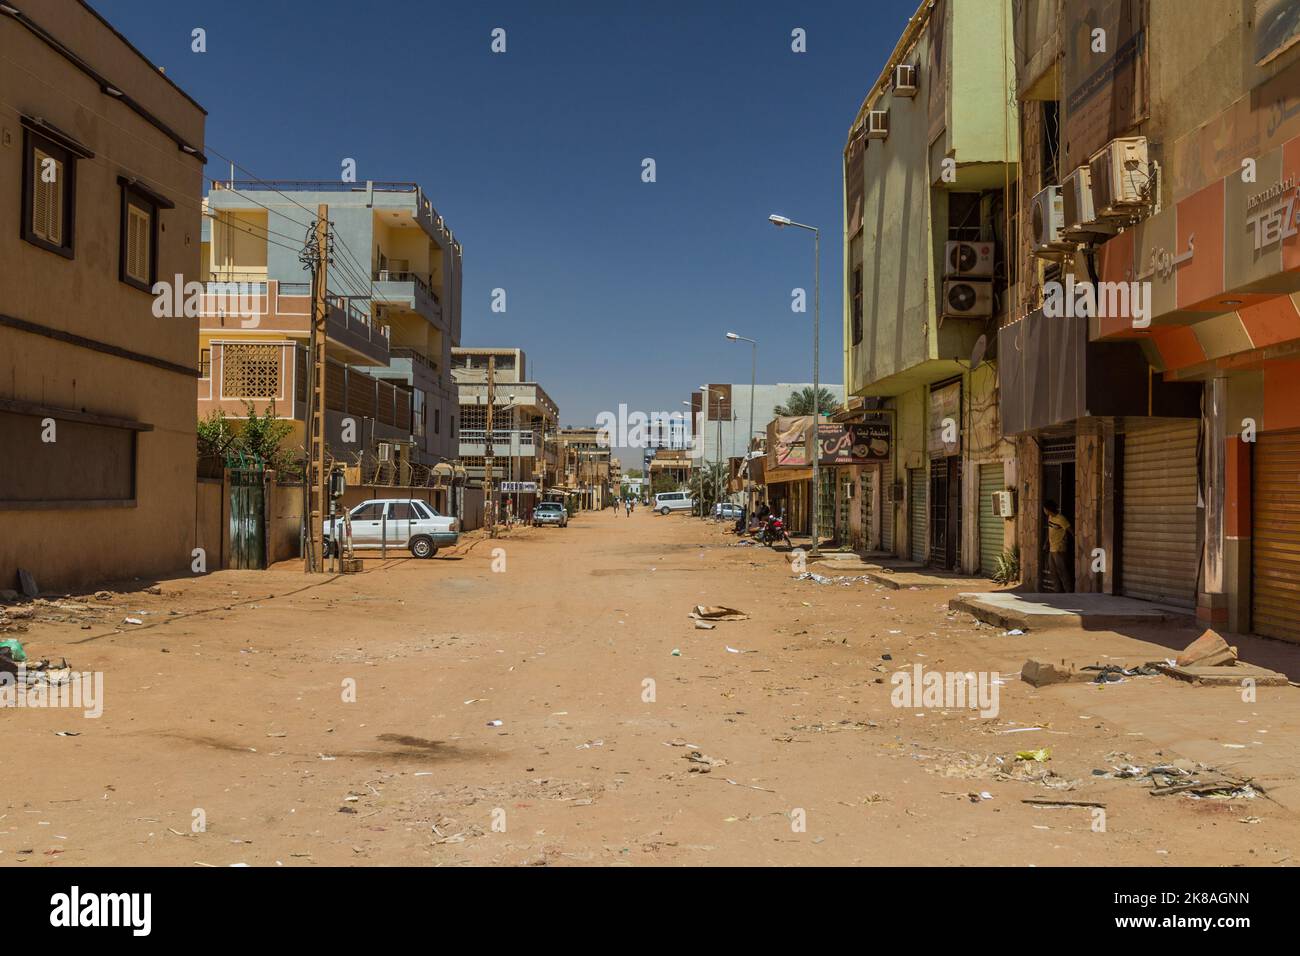 KHARTOUM, SUDAN - MARCH 8, 2019: View of a street in Khartoum, capital of Sudan Stock Photo